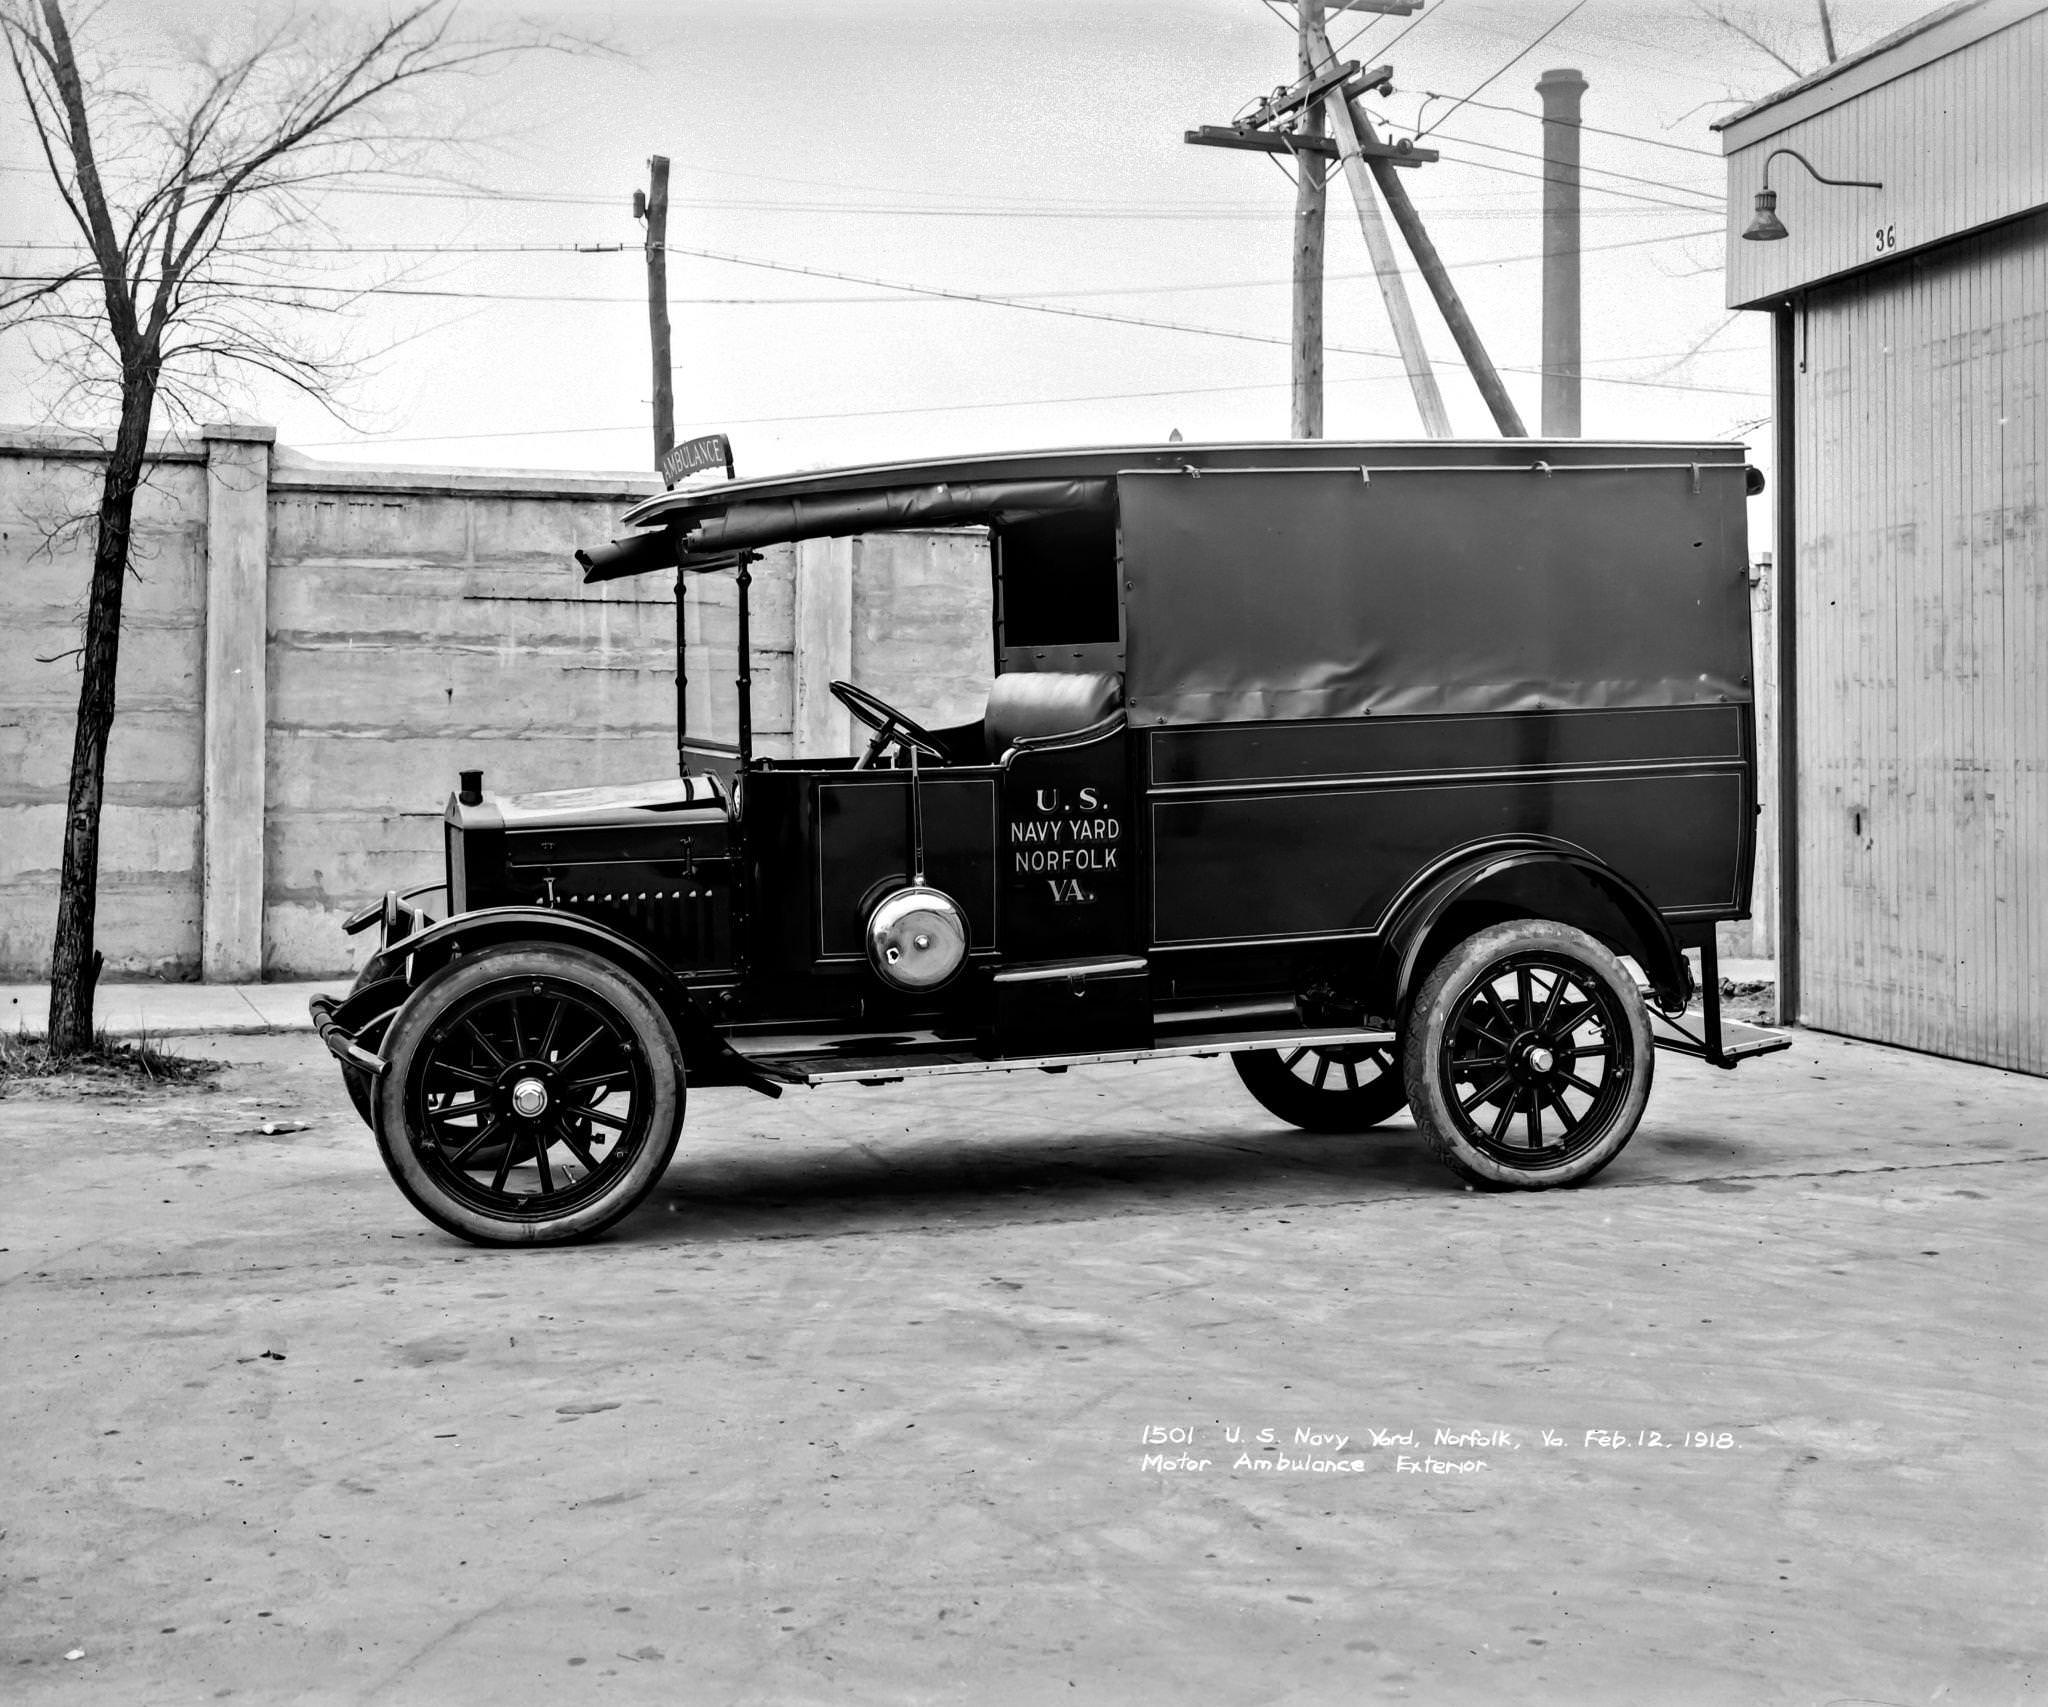 United States Naval yard motorized ambulance in Norfolk, Virginia in 1918